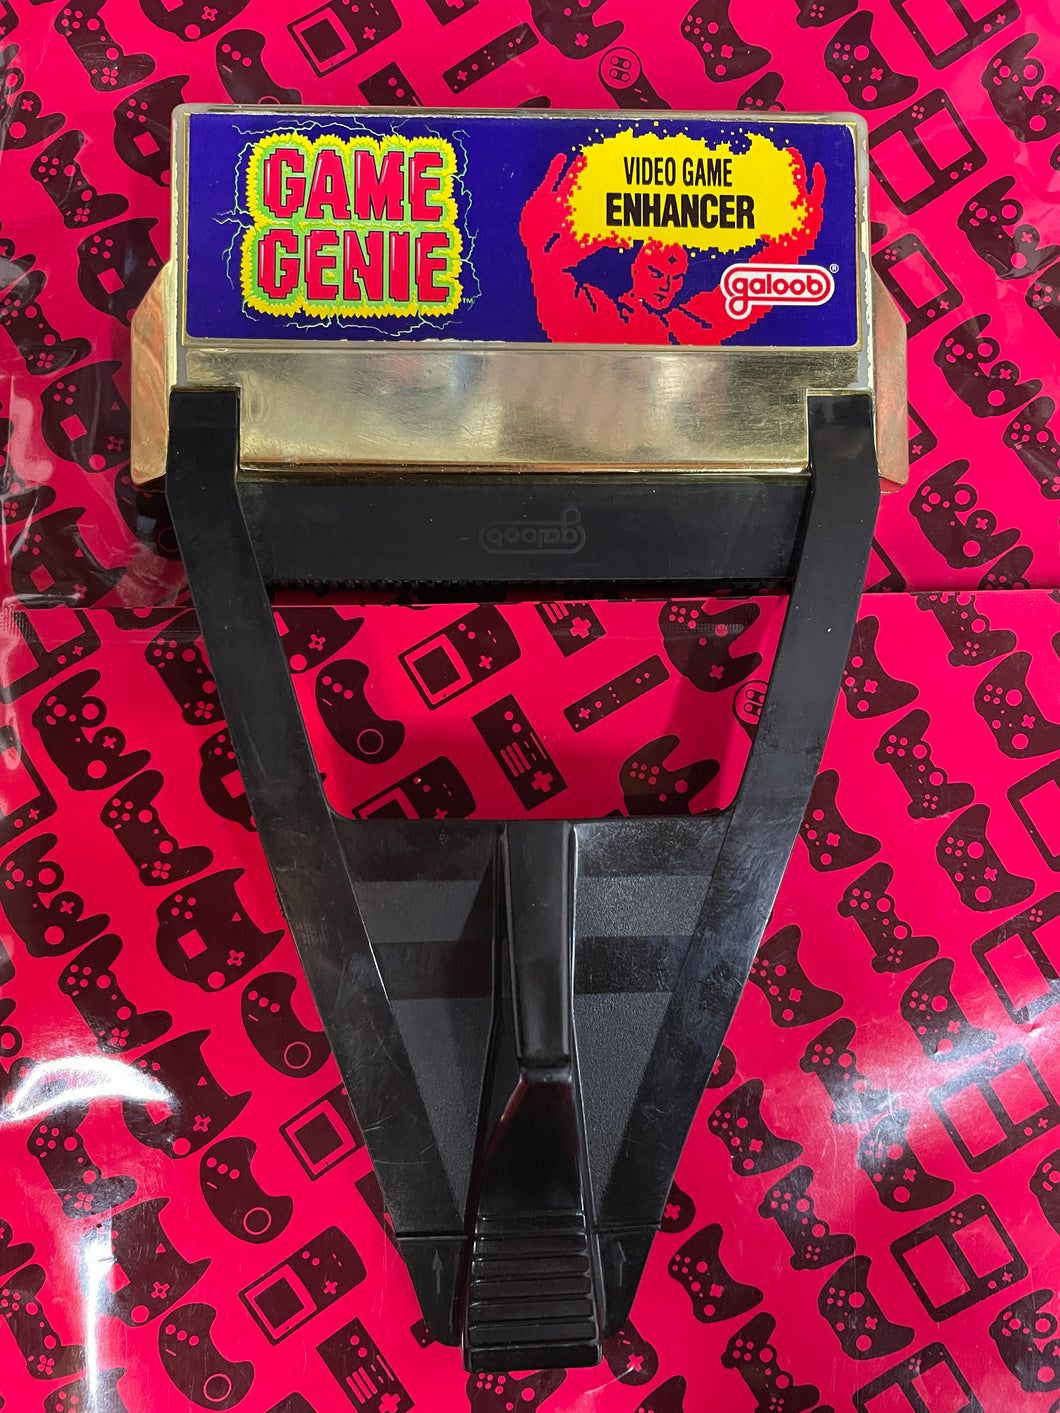 Game Genie Model 7356 Video Game Enhancer